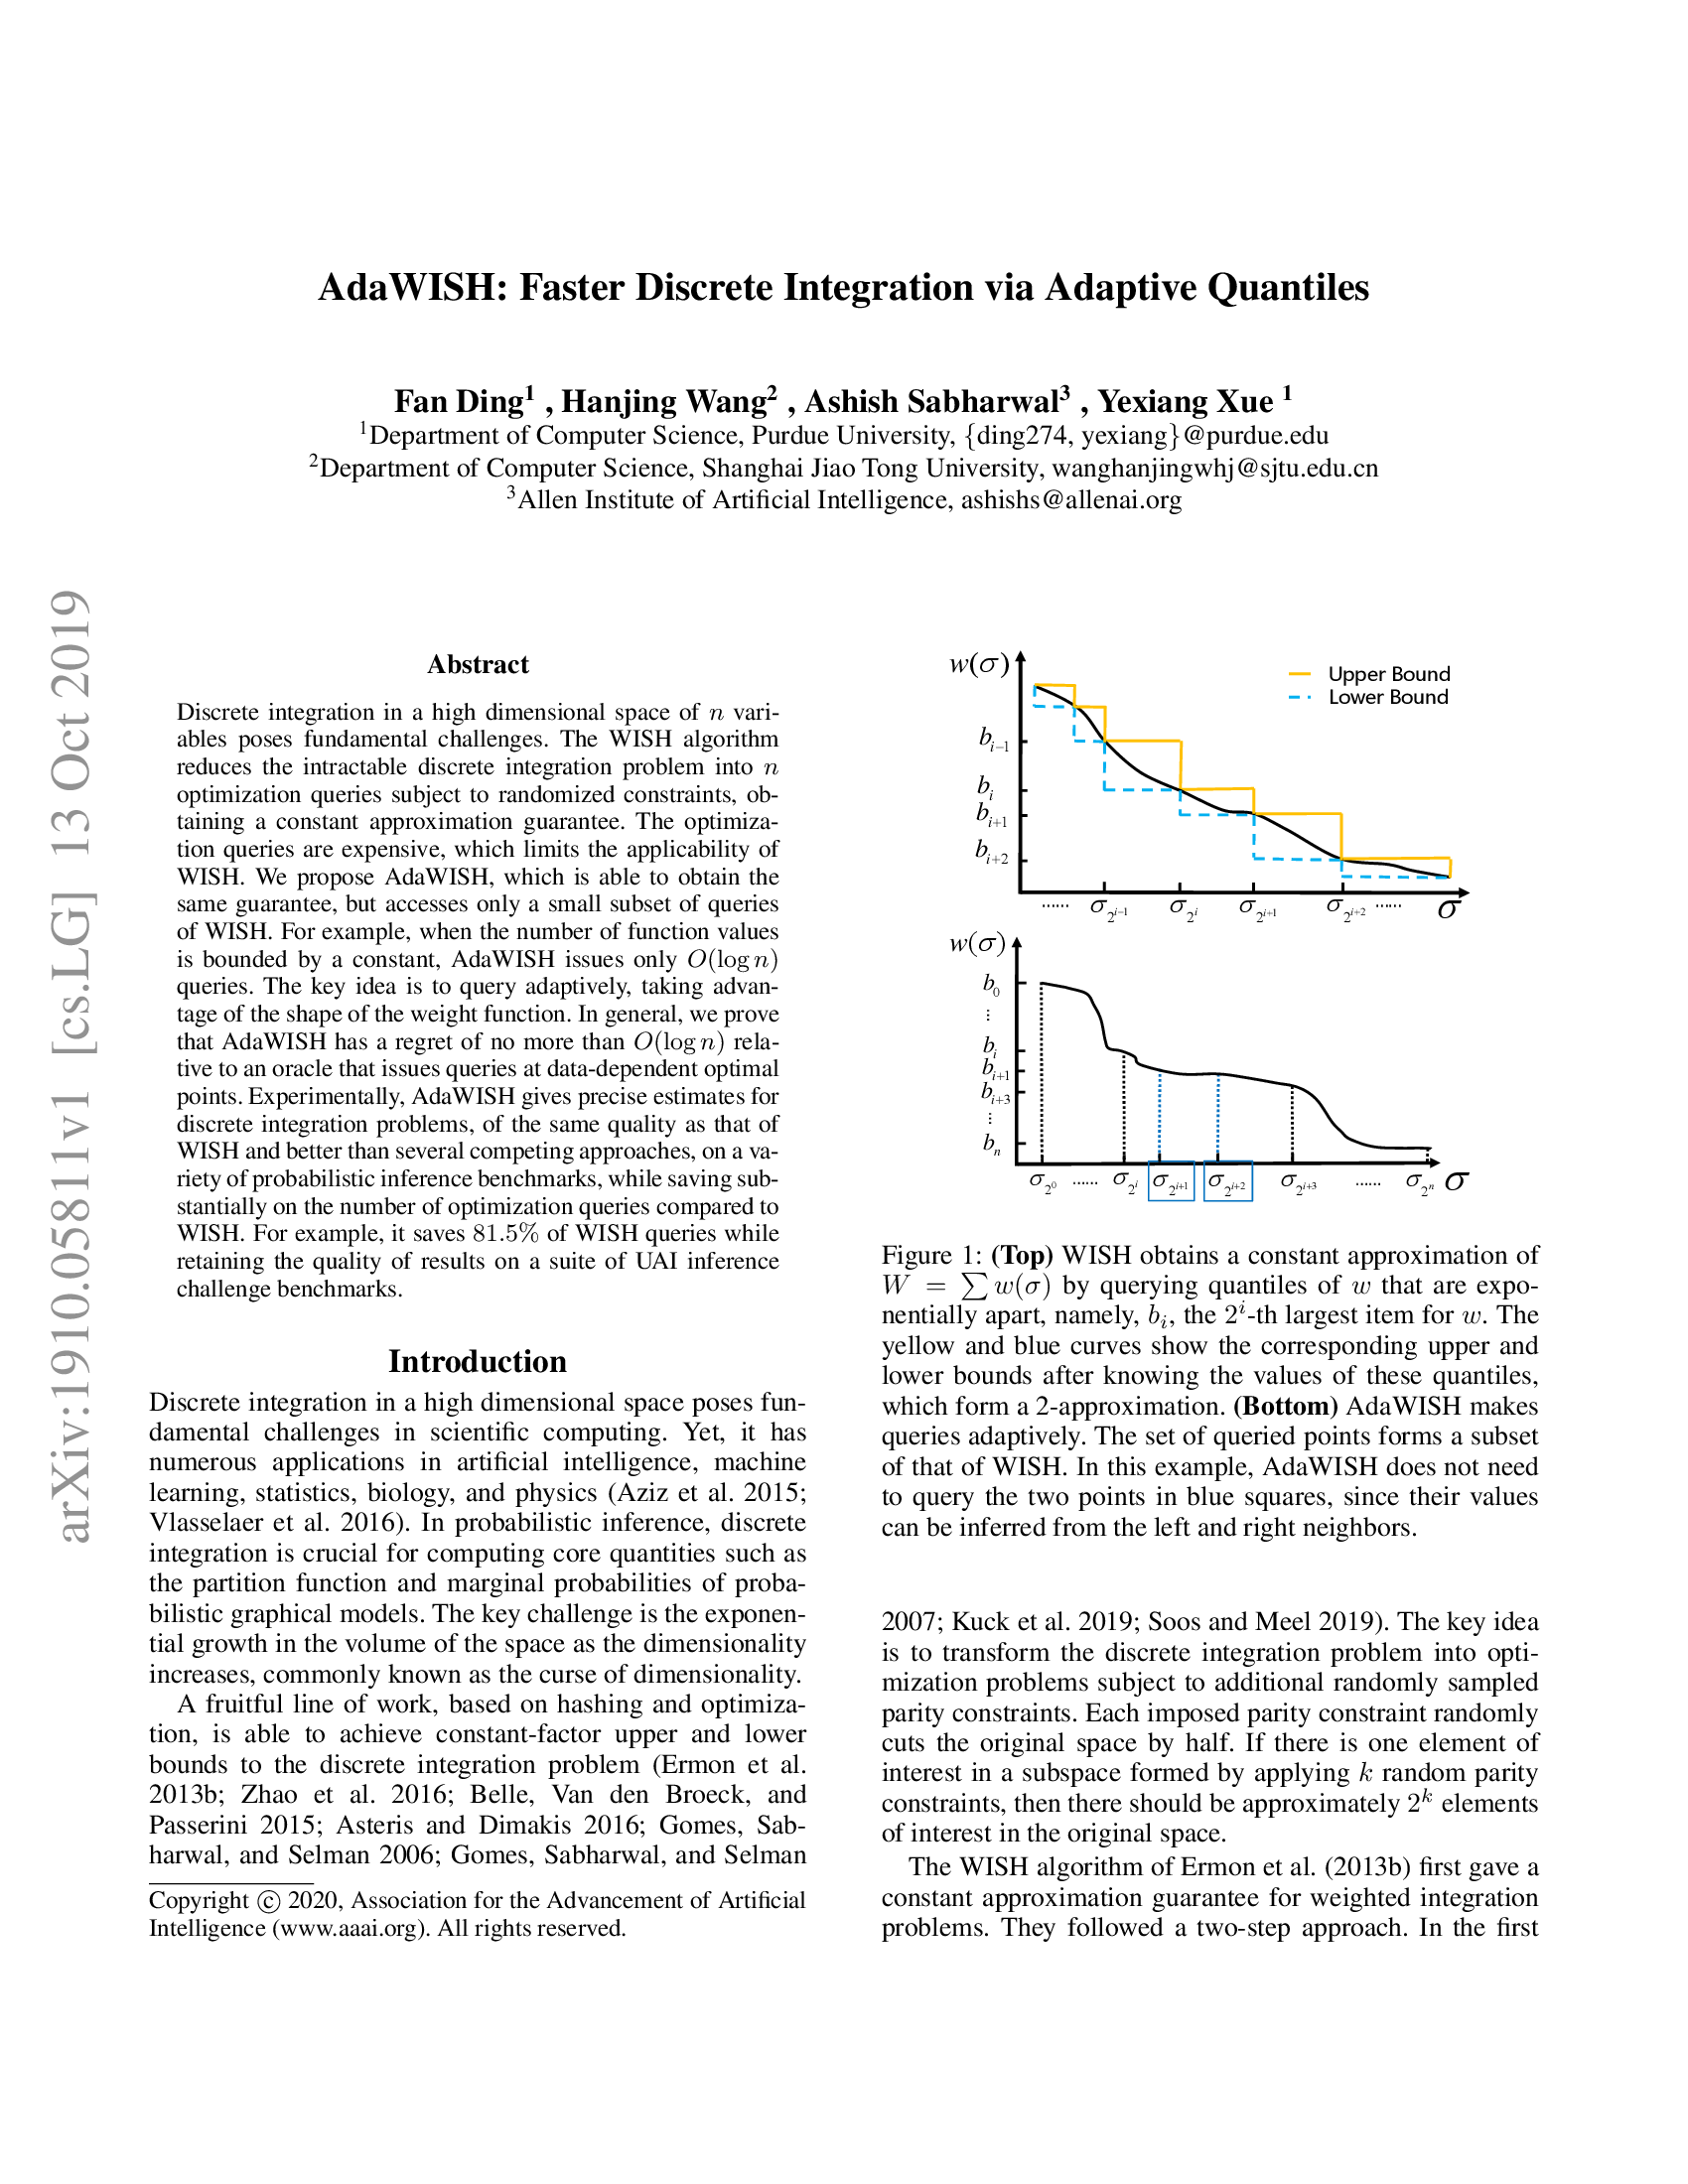 AdaWISH: Faster Discrete Integration via Adaptive Quantiles